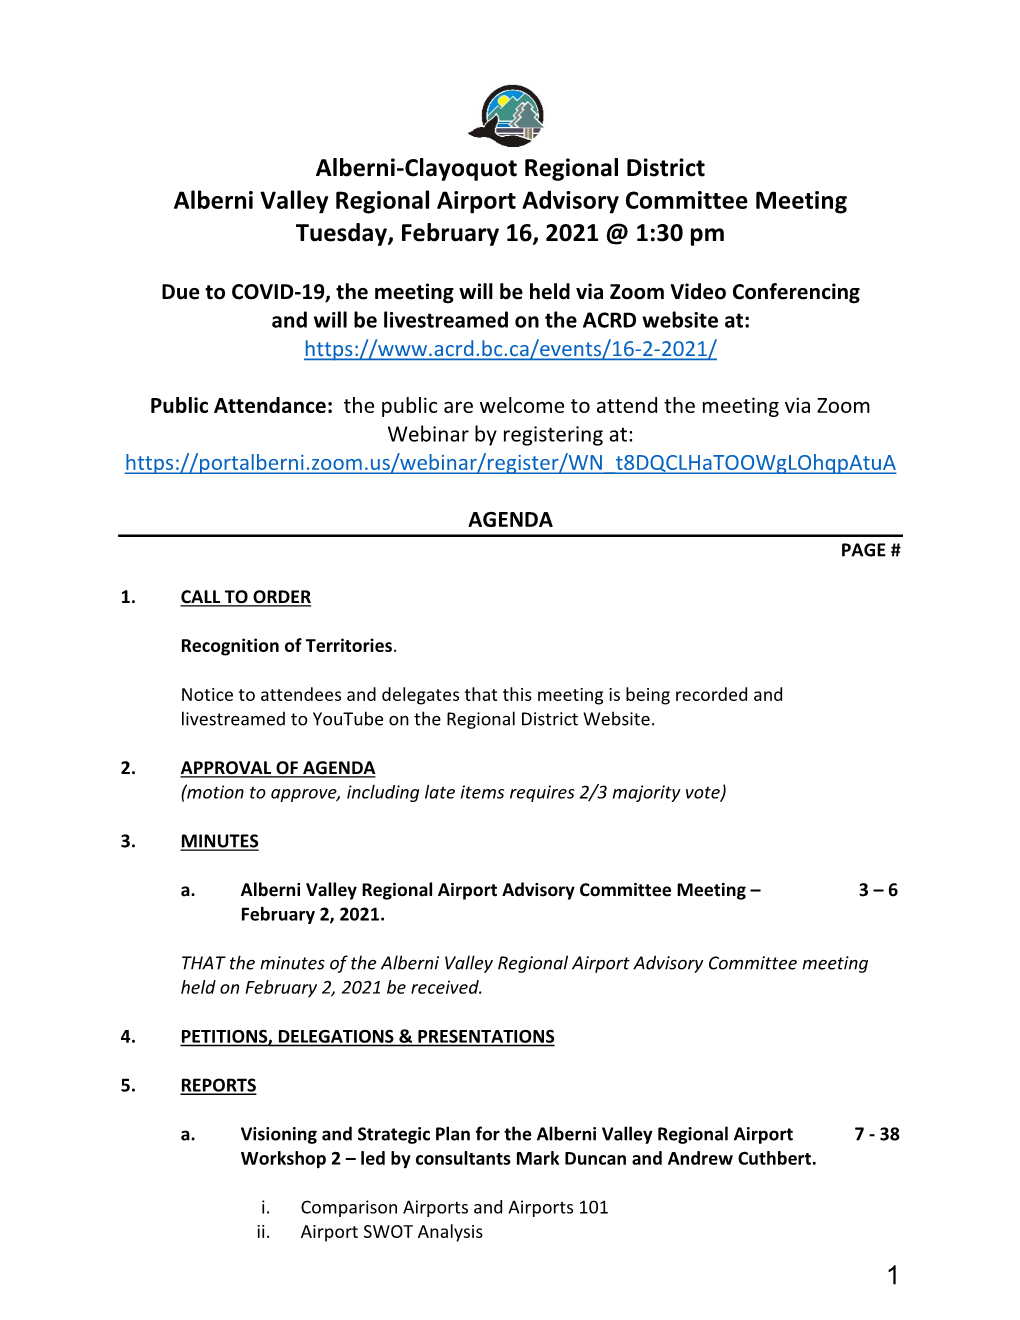 Alberni-Clayoquot Regional District Alberni Valley Regional Airport Advisory Committee Meeting Tuesday, February 16, 2021 @ 1:30 Pm